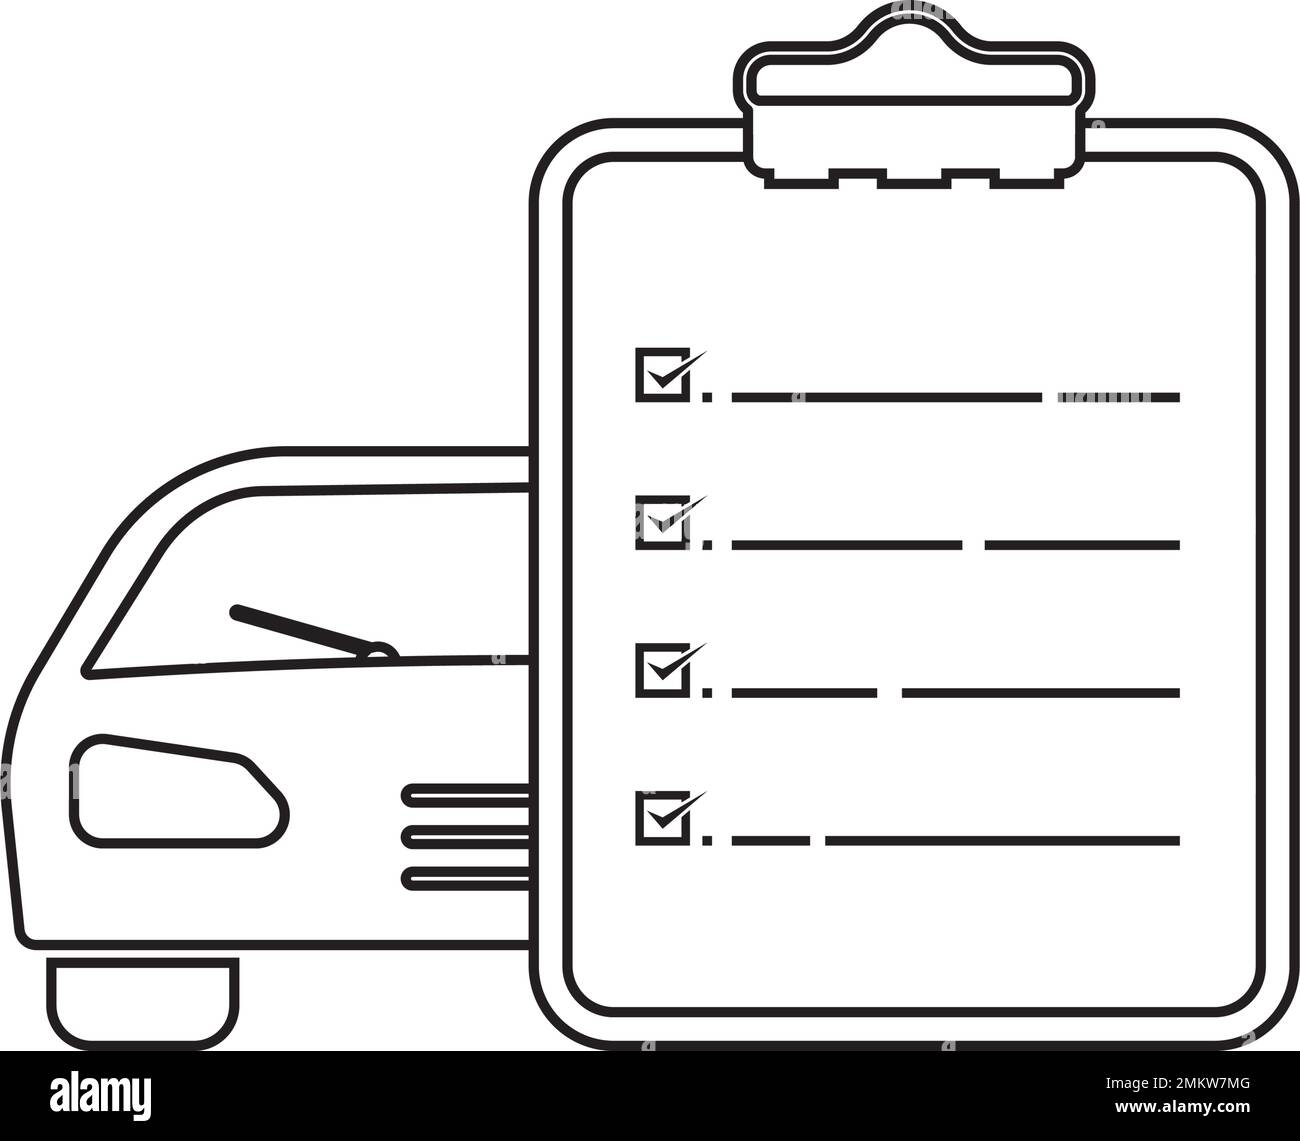 Car Maintenance List Icon, Vehicle Functional Checks, Servicing, Repairing, Replacing Of Necessary Parts Vector Art Illustration Stock Vector